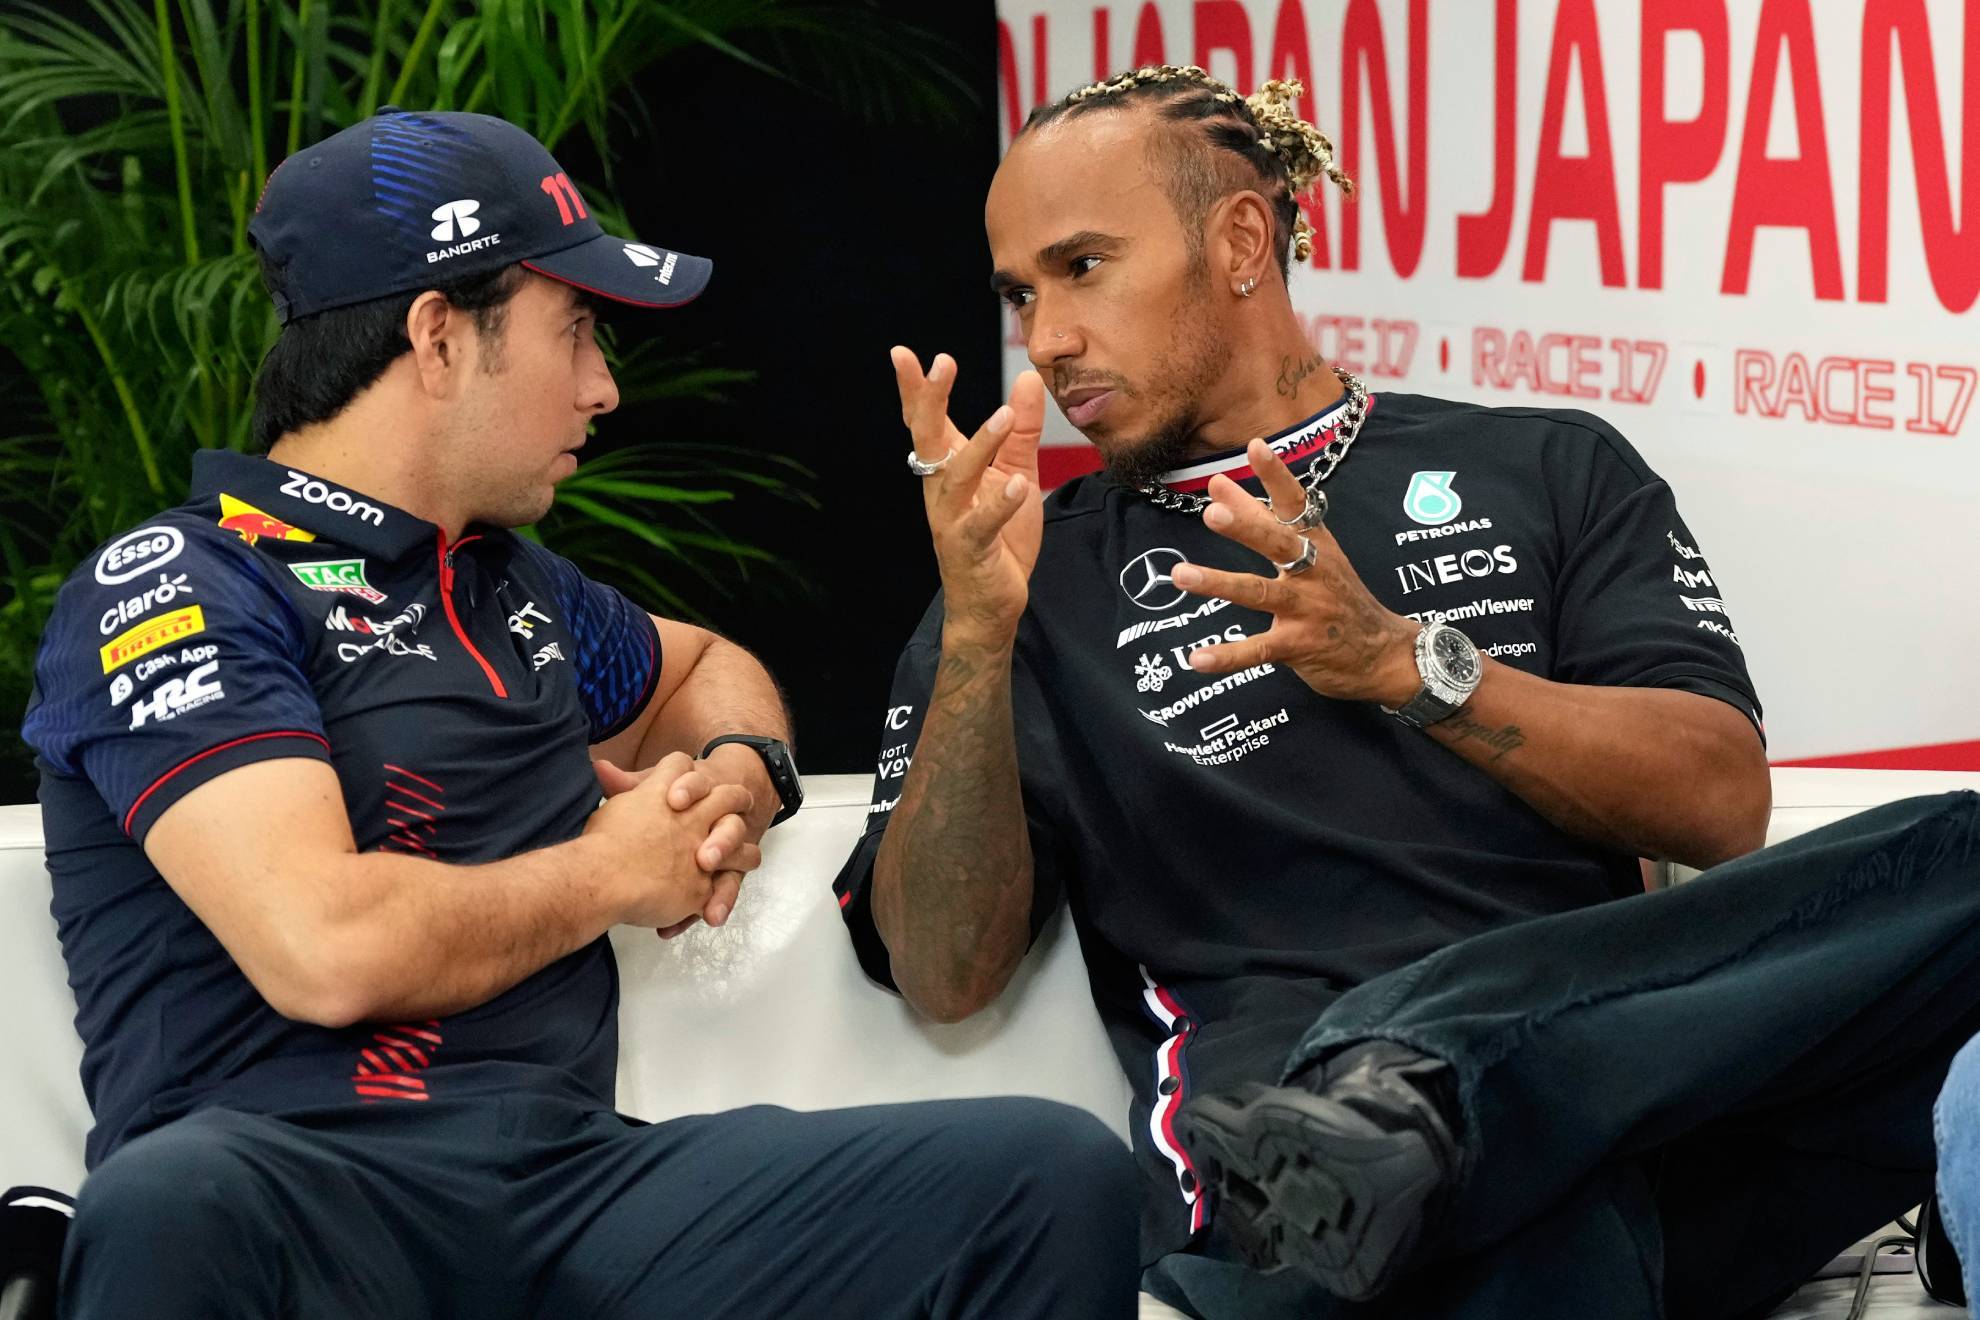 Lewis Hamilton puts Checo Perez in an uncomfortable position amid Max Verstappen controversy